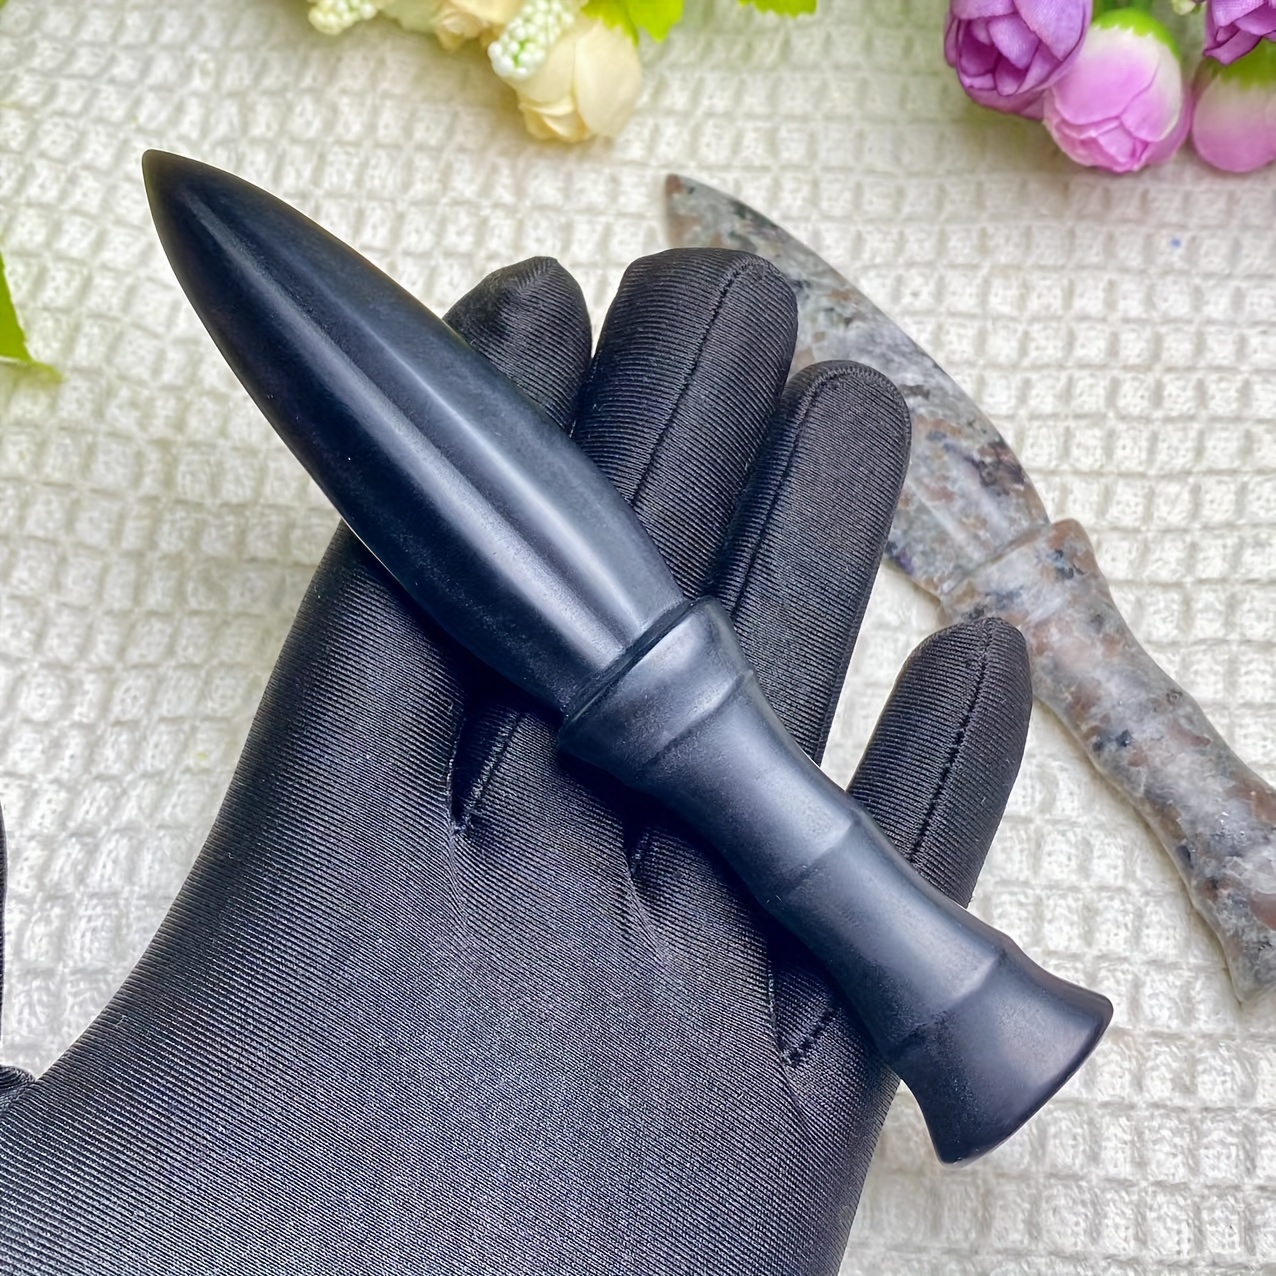 

Obsidian/yooperlite Stone Carved Dagger - 1pc Natural Crystal Polished Model Knife For Home Decor, Unique Gift Idea